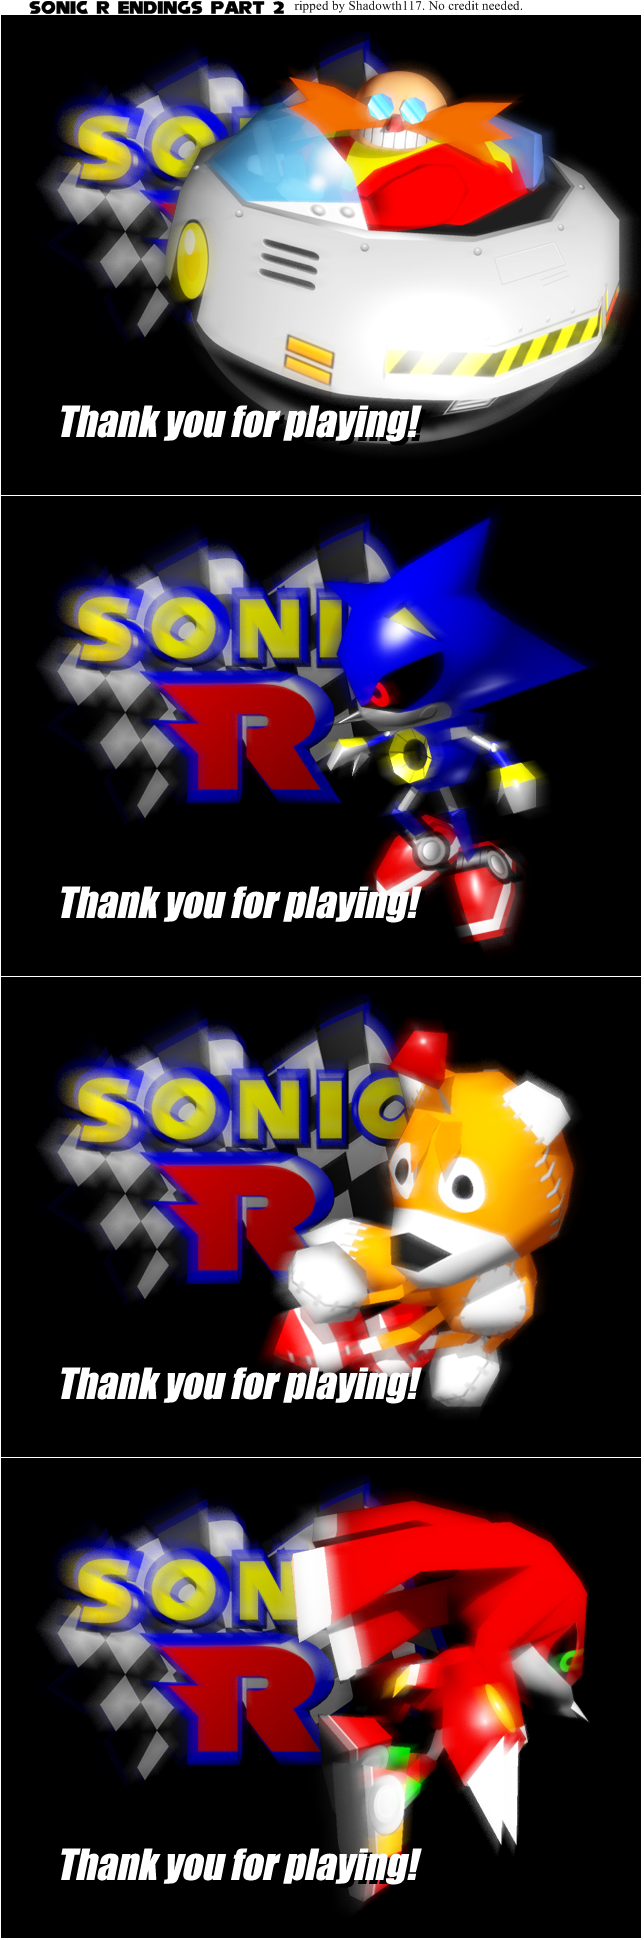 Sonic R - Endings Part 2